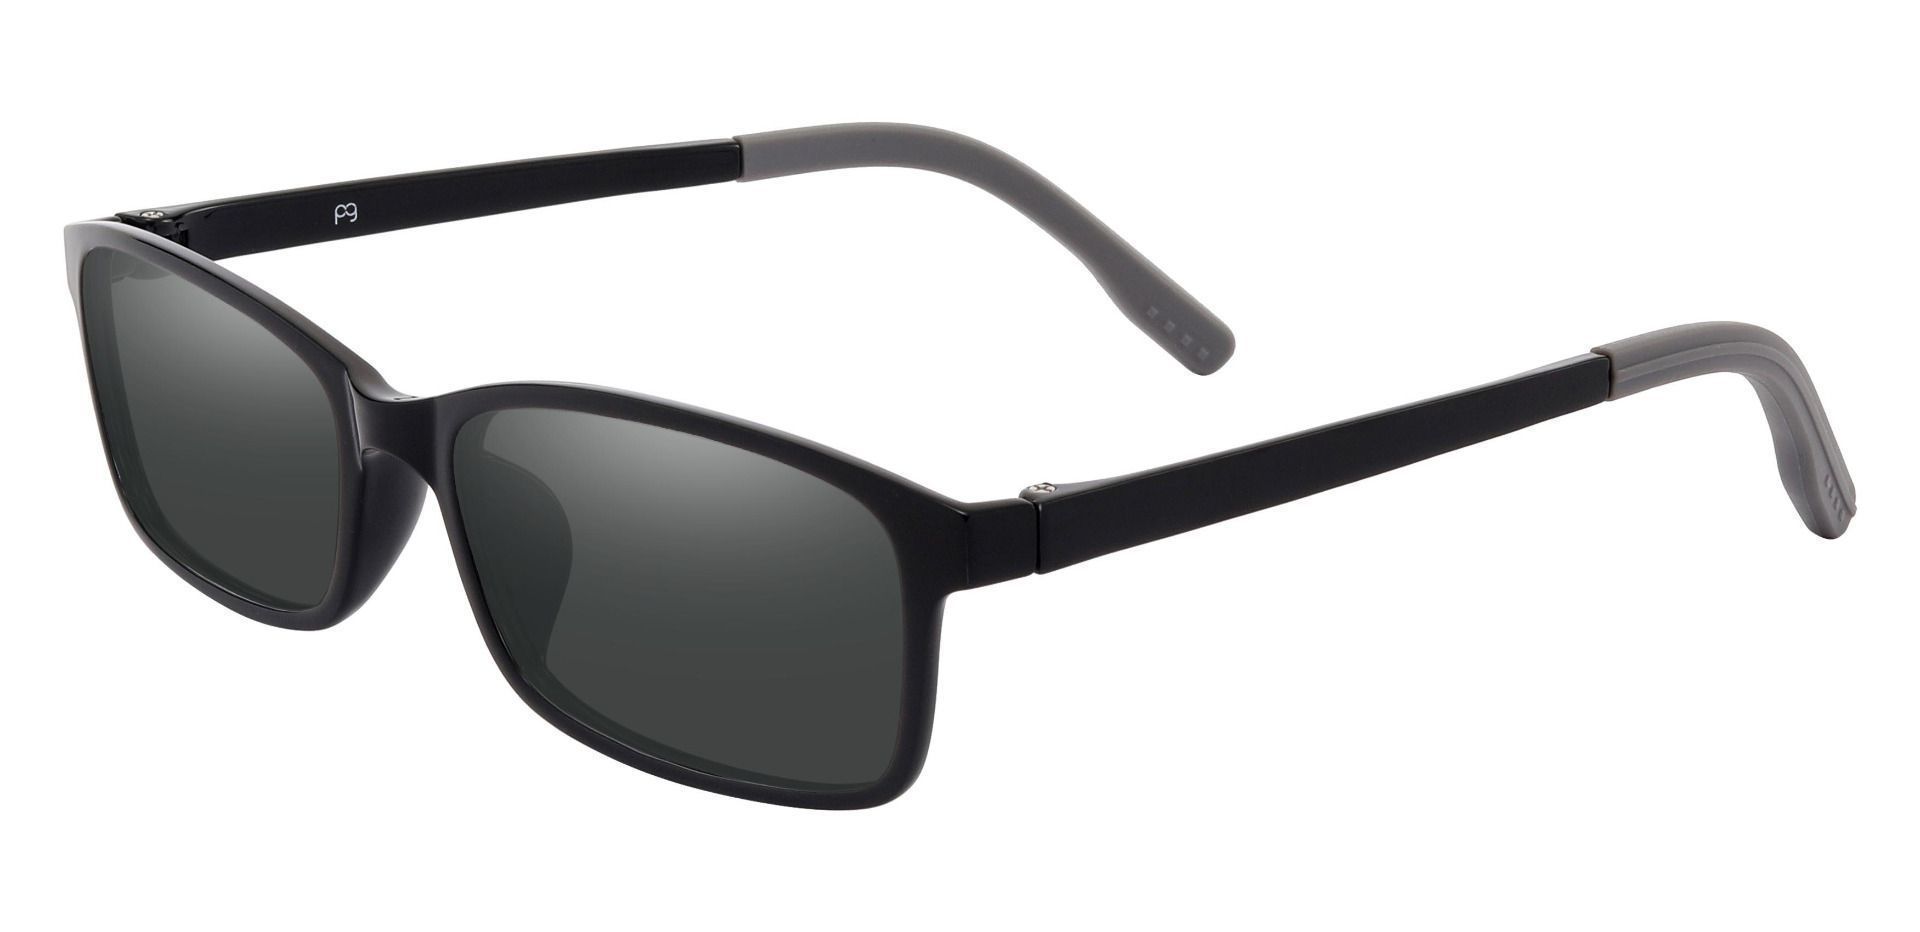 Inman Rectangle Prescription Sunglasses - Black Frame With Gray Lenses